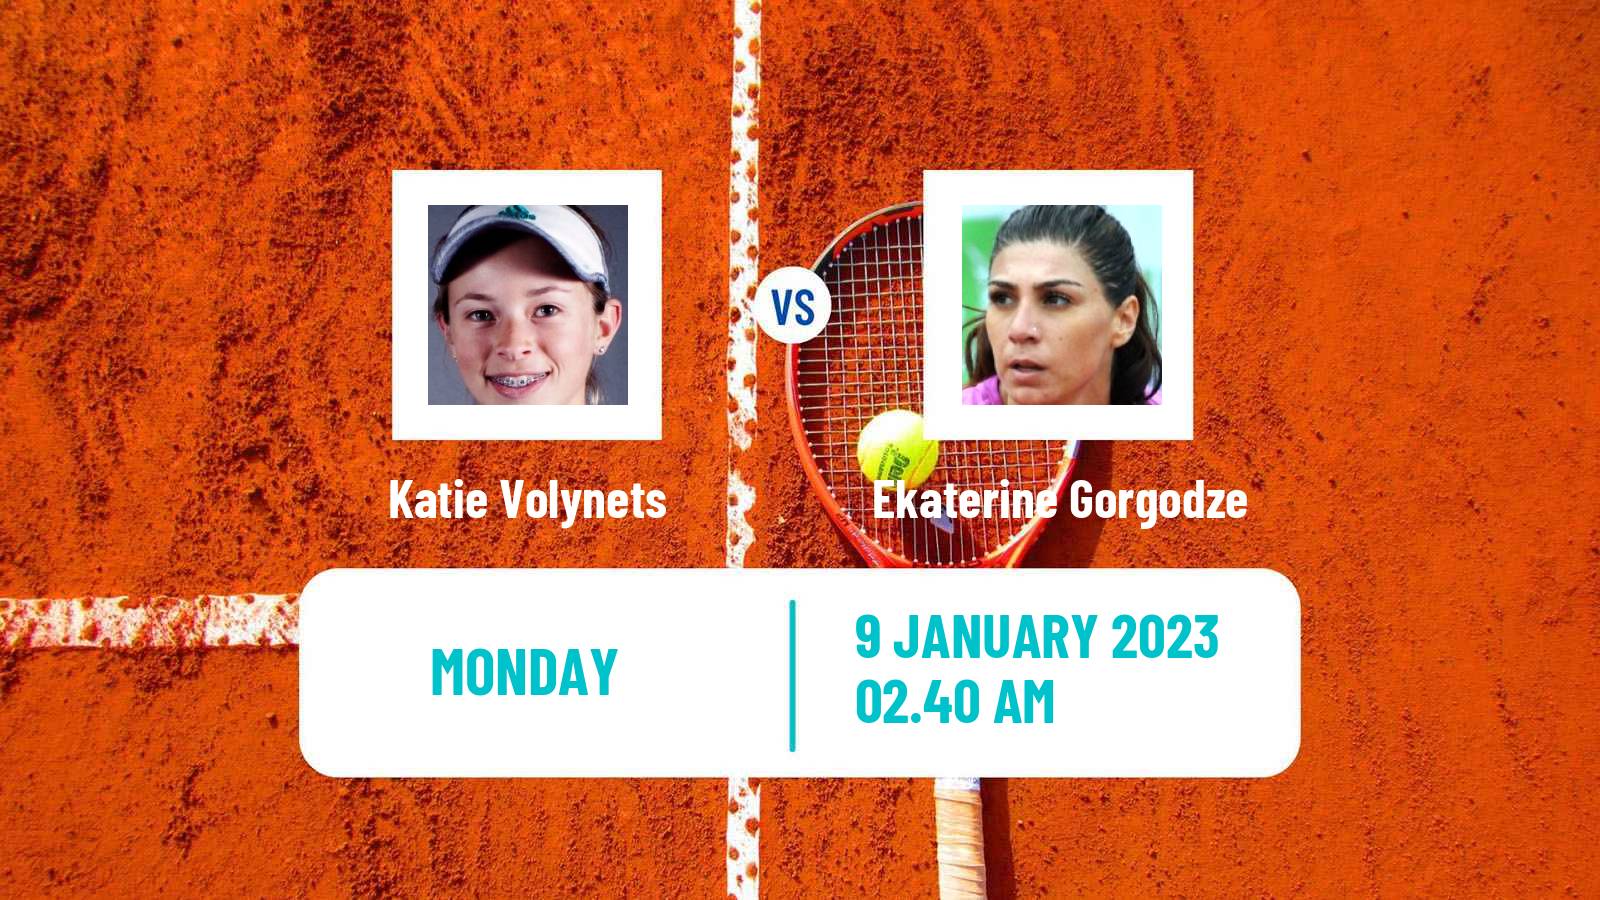 Tennis WTA Australian Open Katie Volynets - Ekaterine Gorgodze